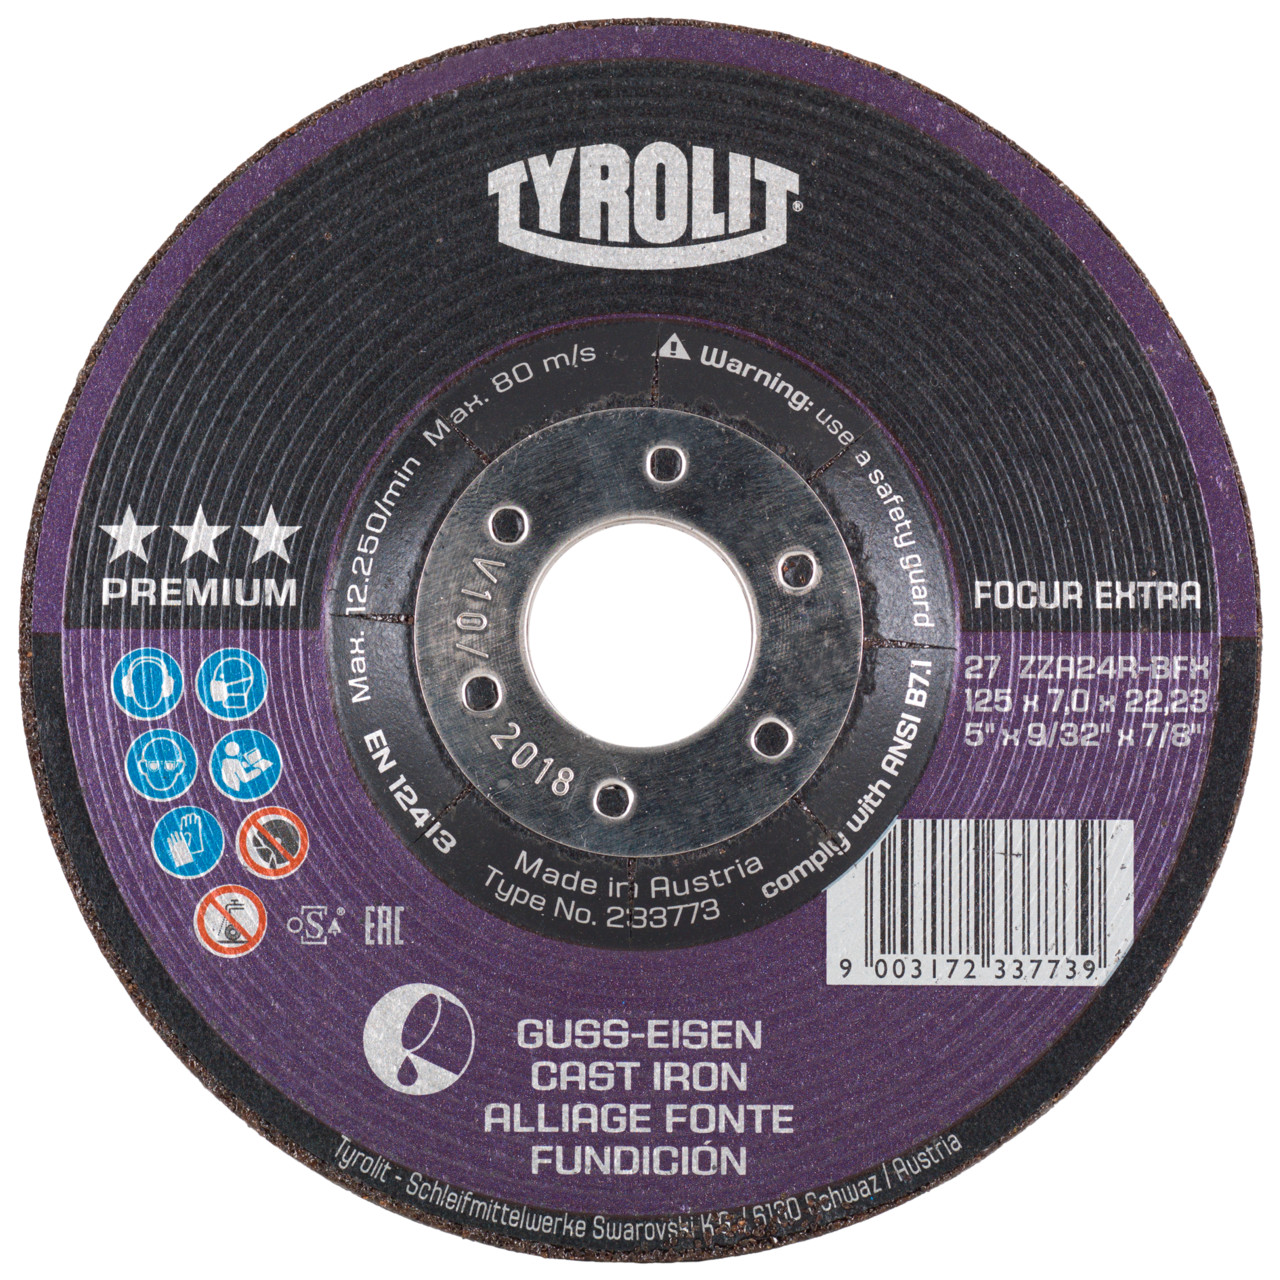 TYROLIT disco de desbaste DxUxH 230x7x22,23 FOCUR Extra para fundición gris, forma: 27 - versión offset, Art. 929020